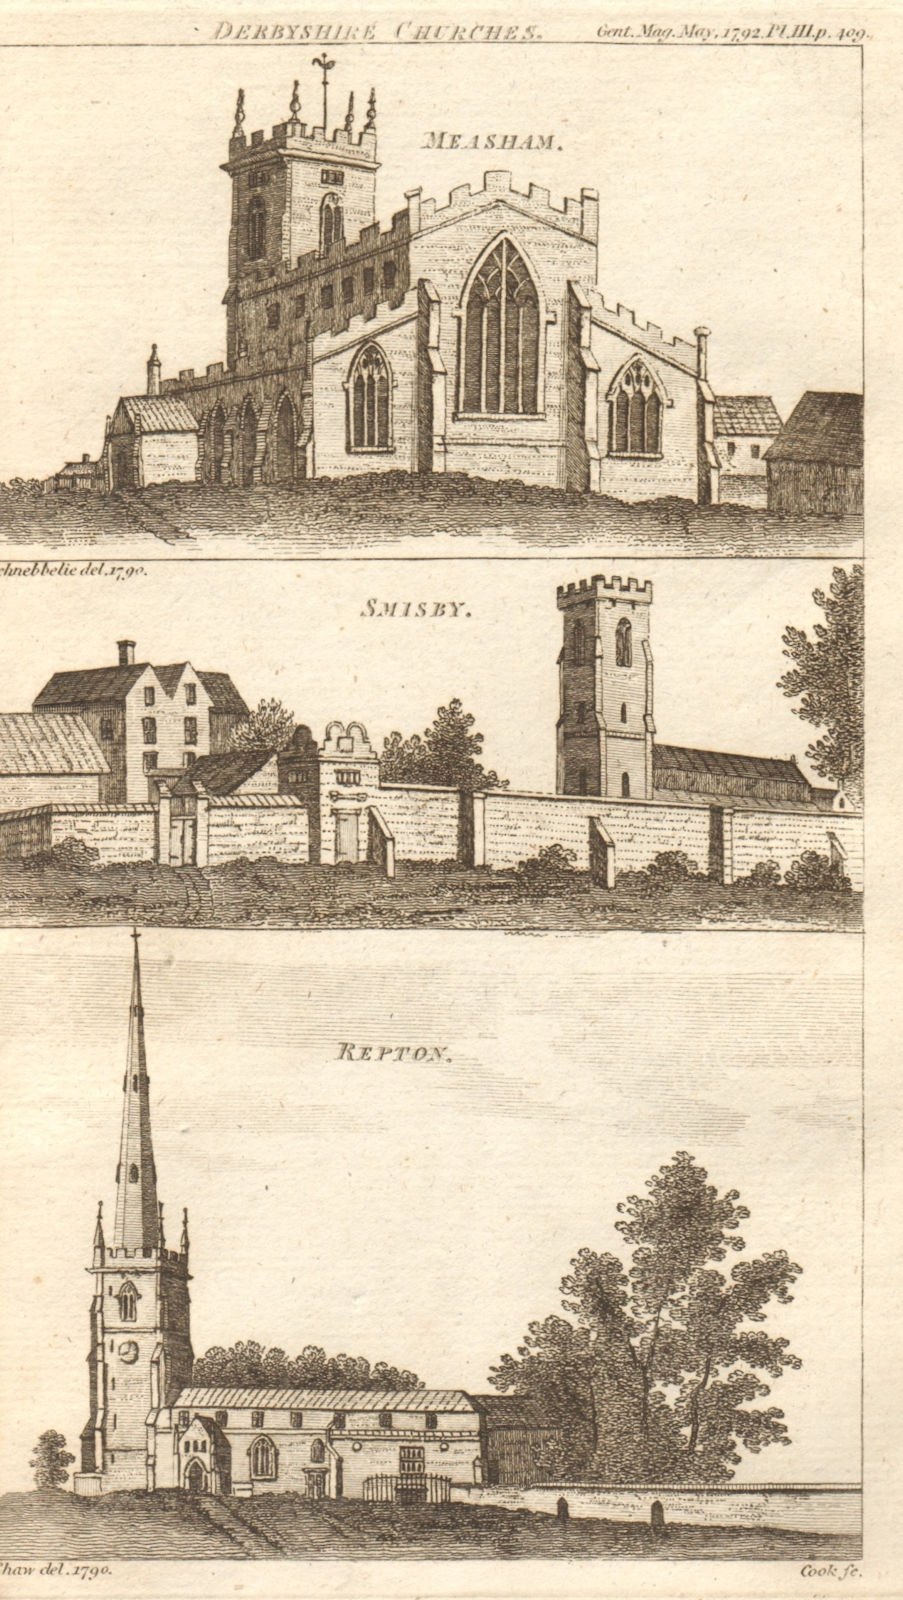 St Laurence Measham. St James Smisby. St Wystan Repton. Derbyshire churches 1792